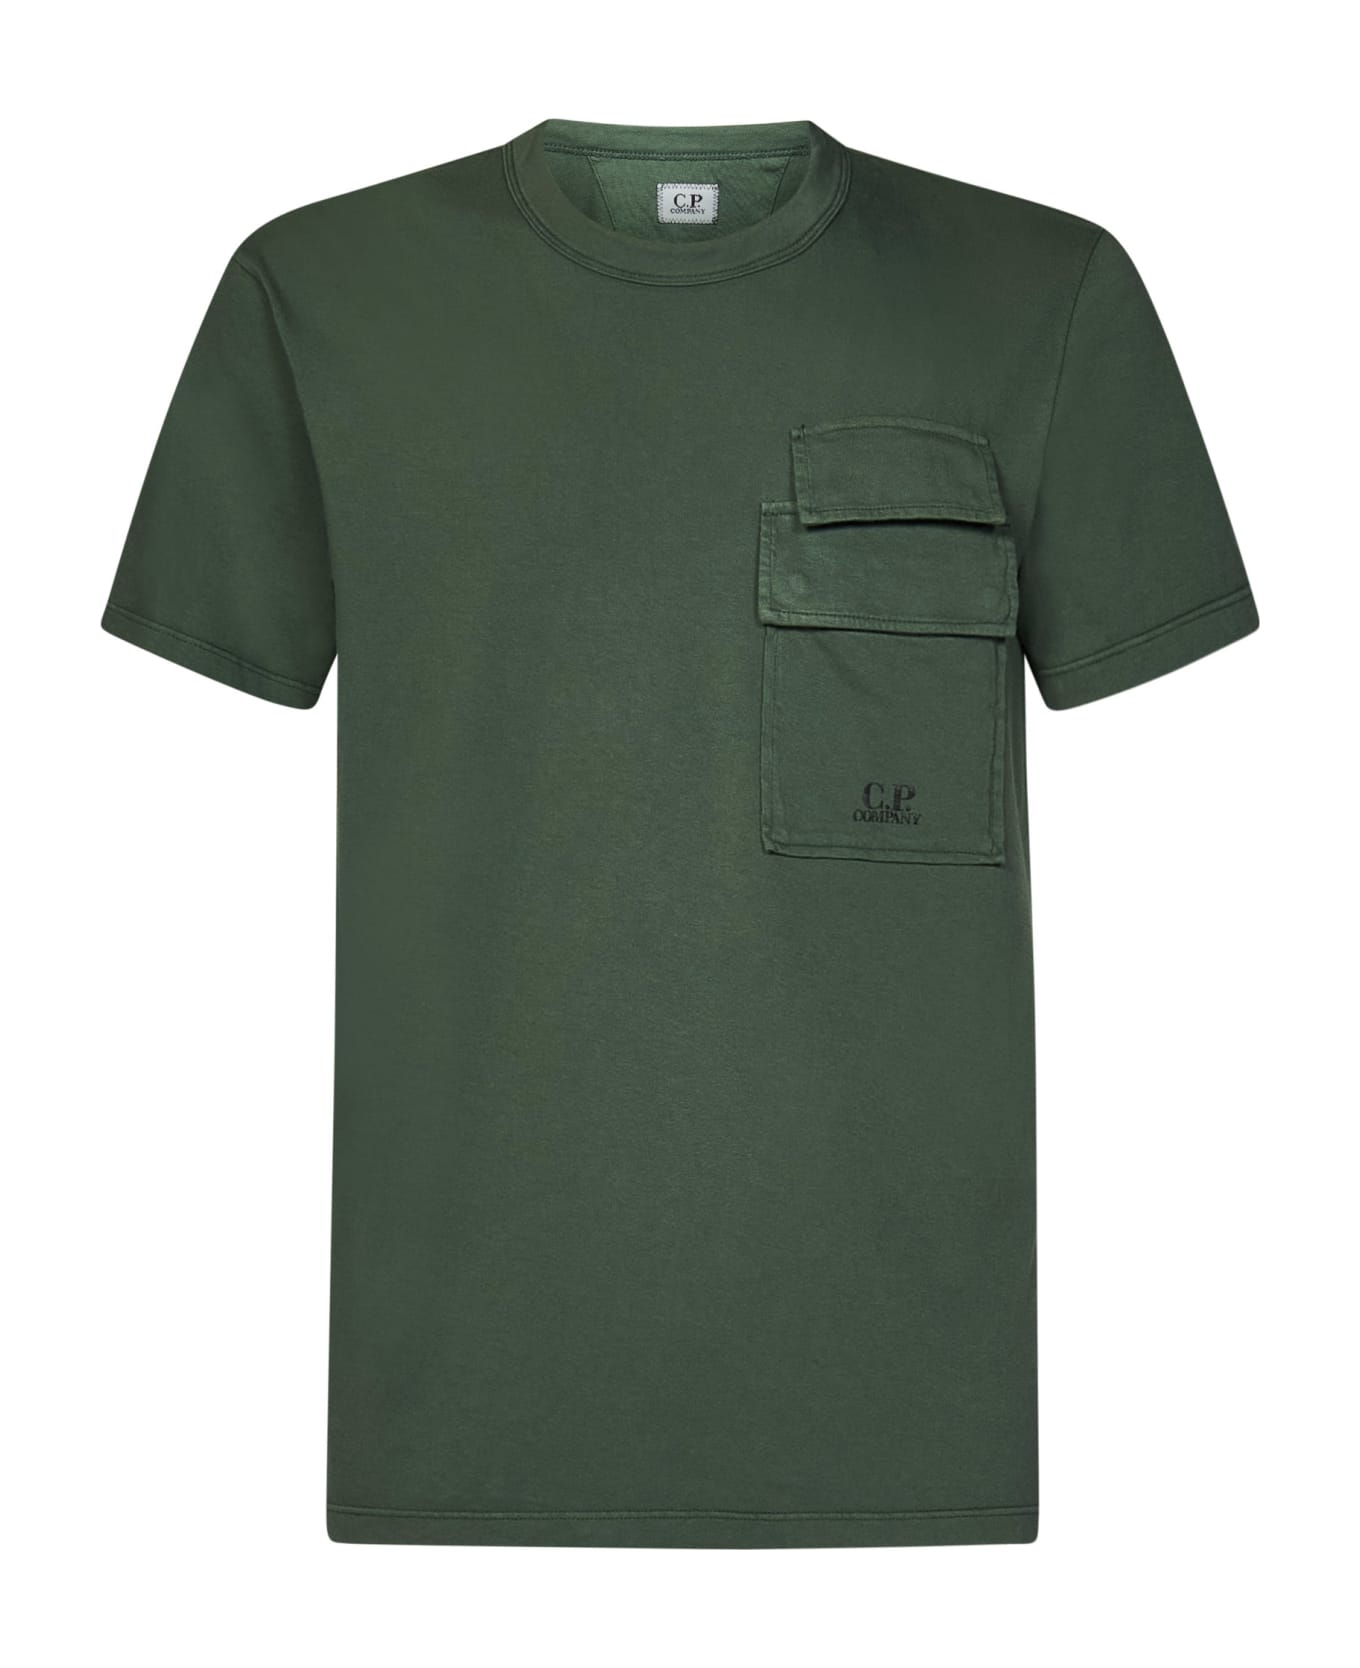 C.P. Company T-shirt - GREEN